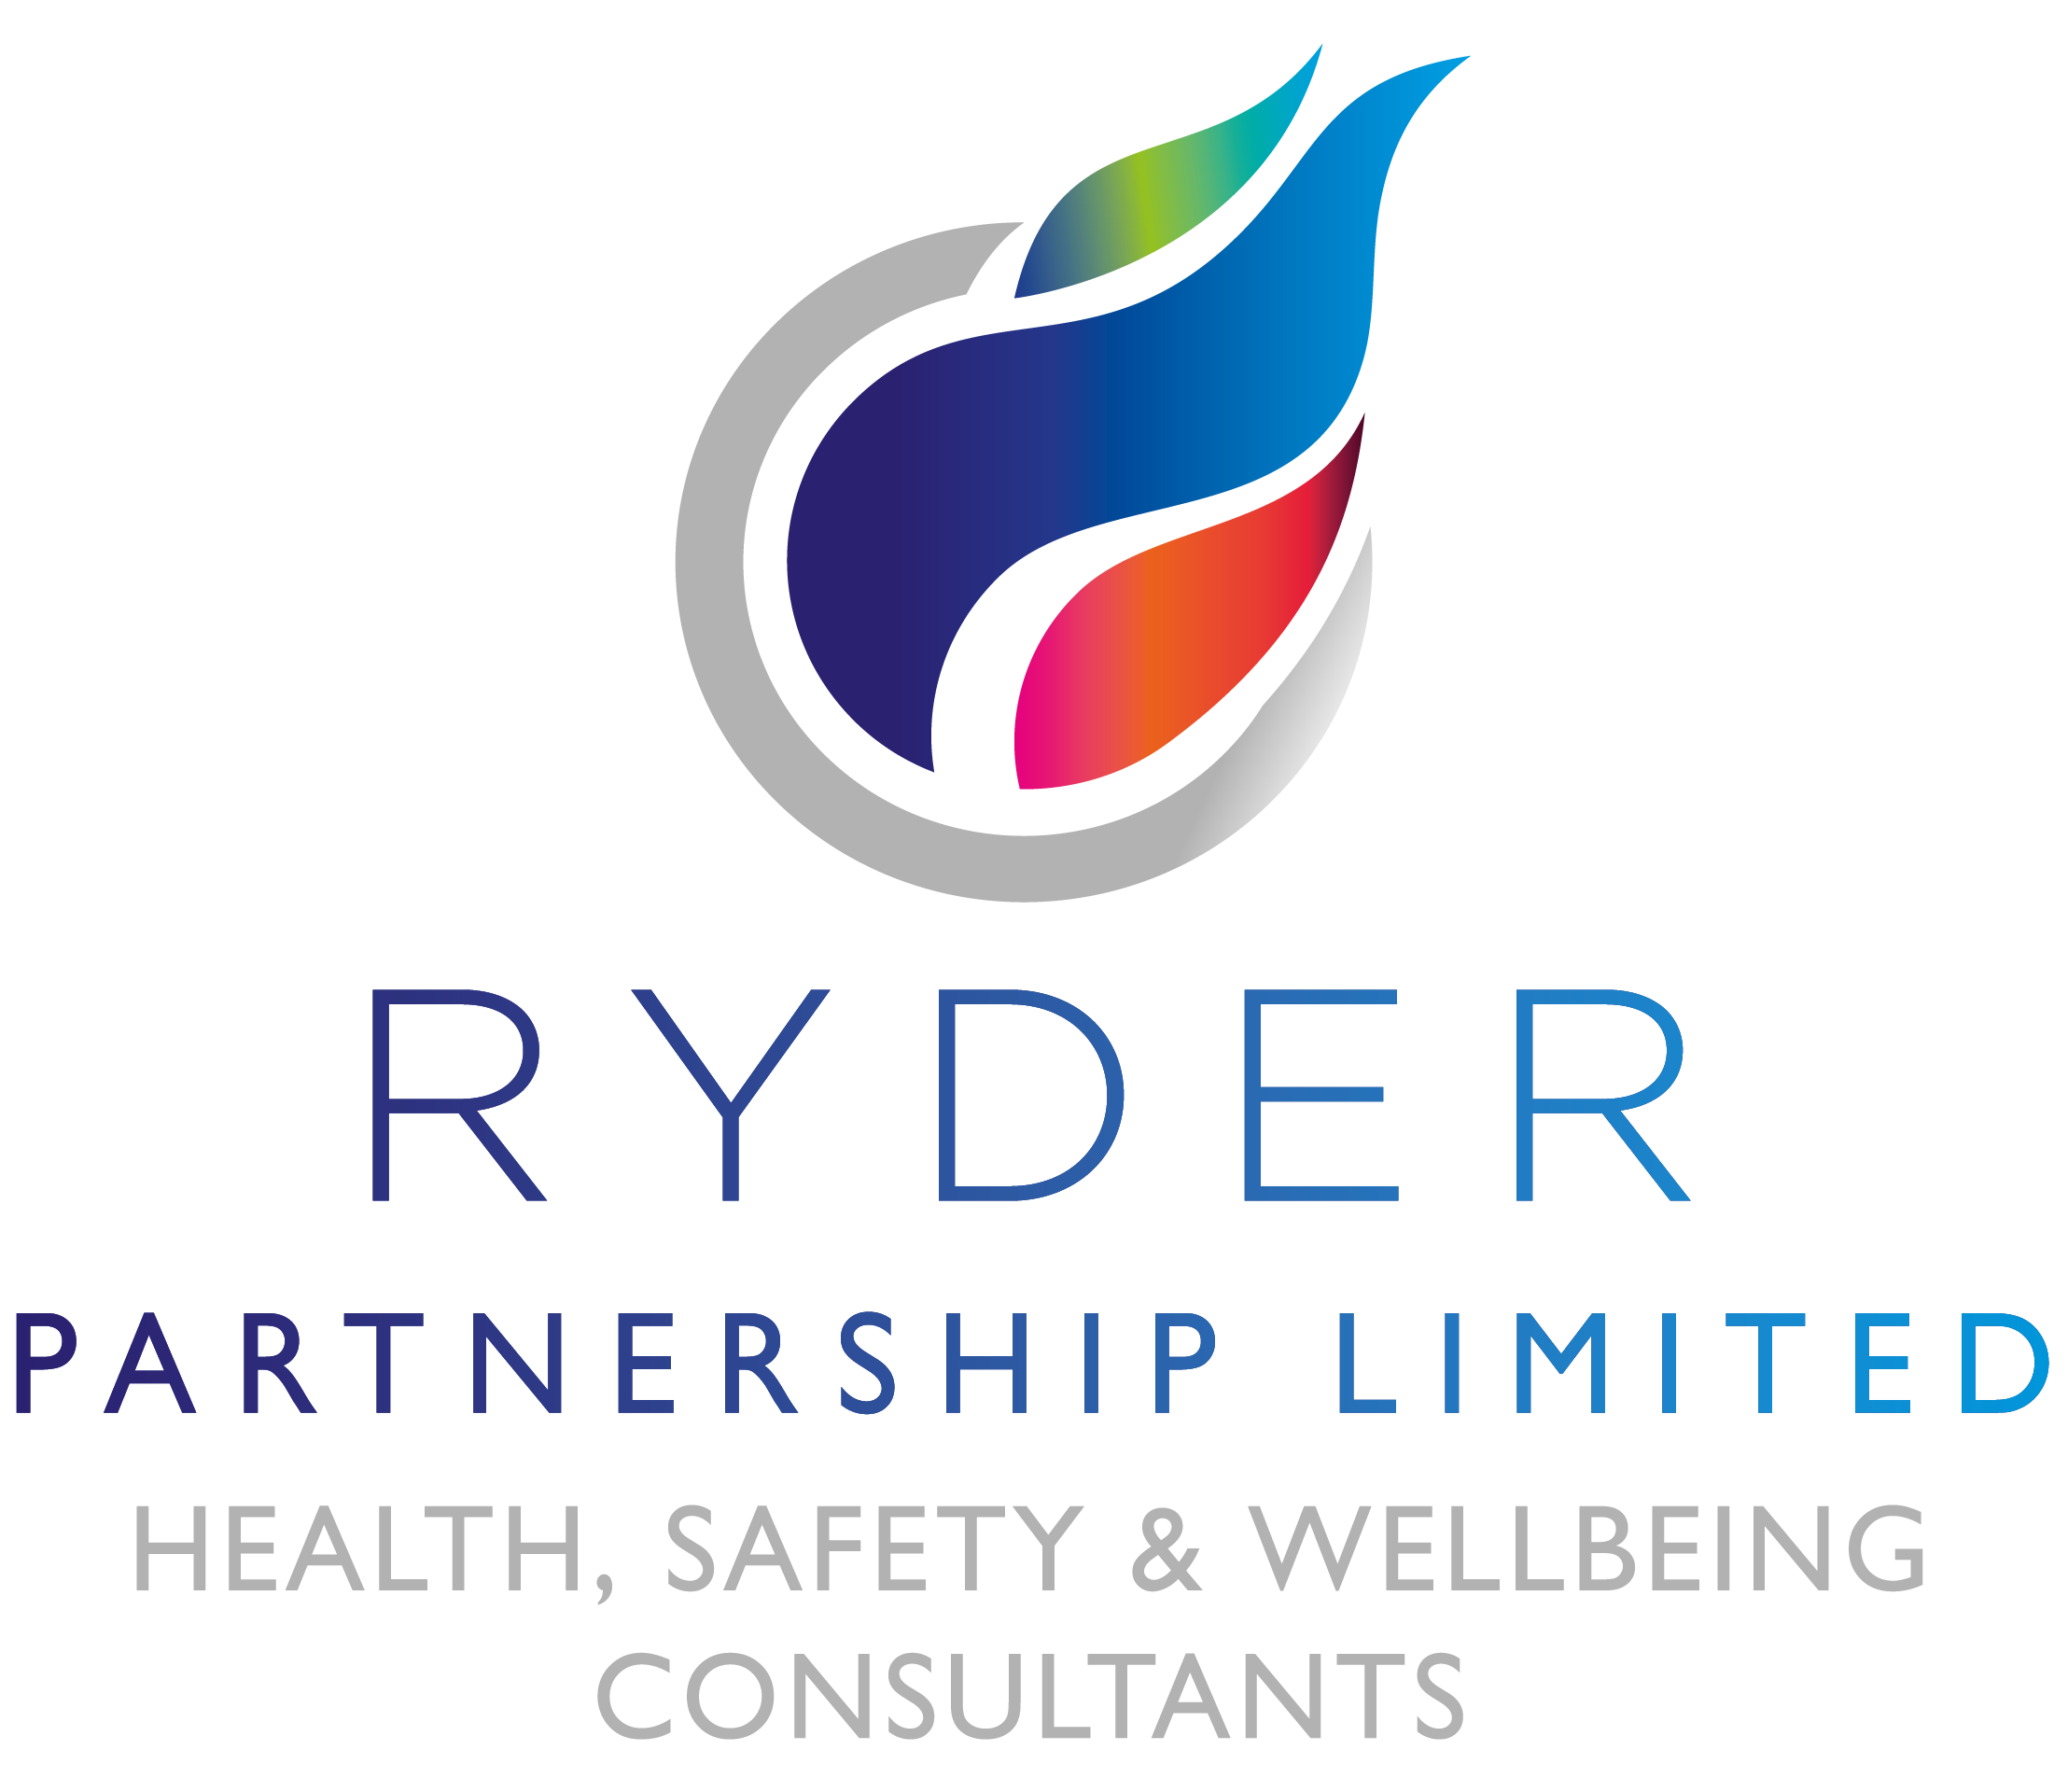 Ryder Partnership Ltd